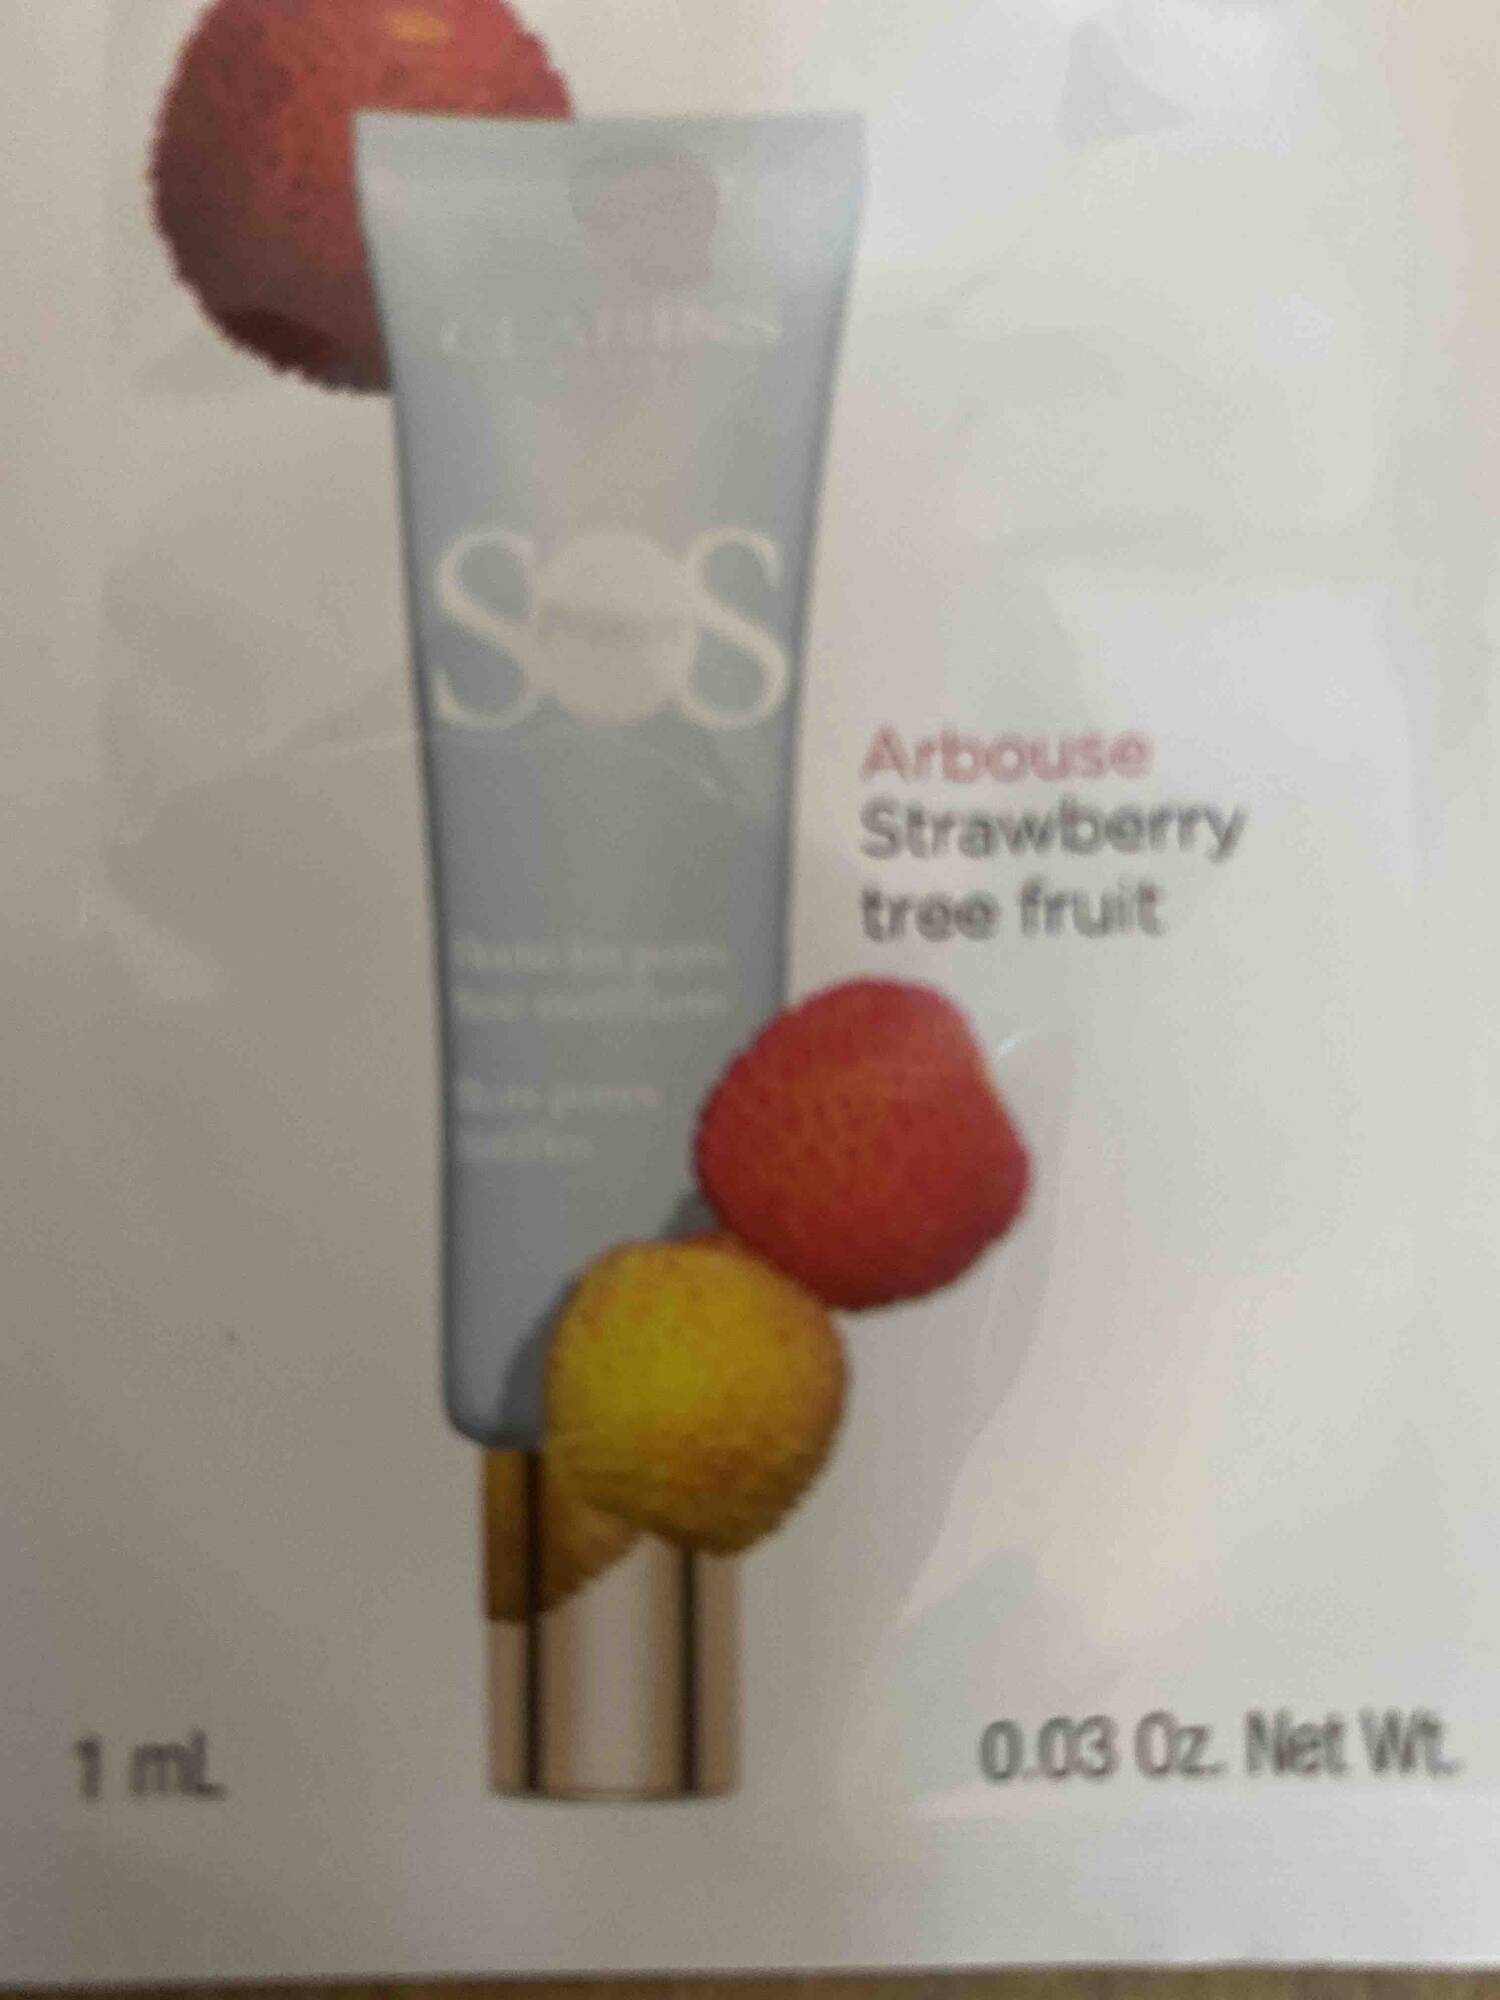 CLARINS - SOS arbouse  - Base matifiante arbouse strawberry tree fruit